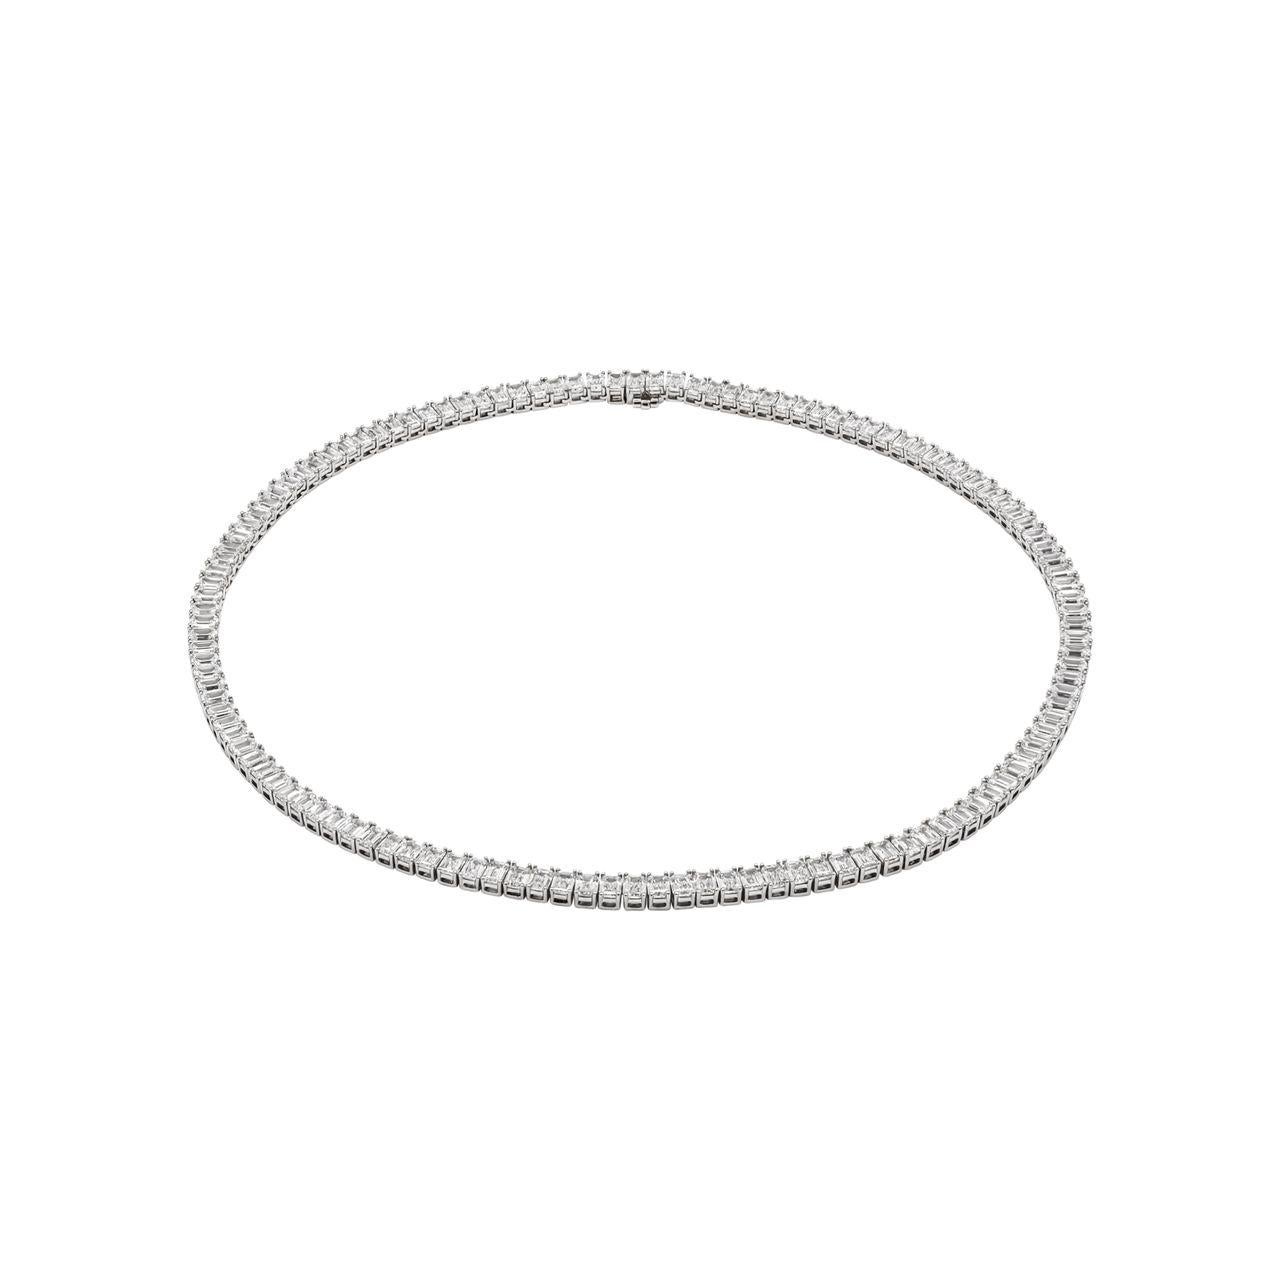 Emerald Cut  Tennis necklace with GIA Certified Emerald cut diamonds in Platinum 38.76 carat For Sale